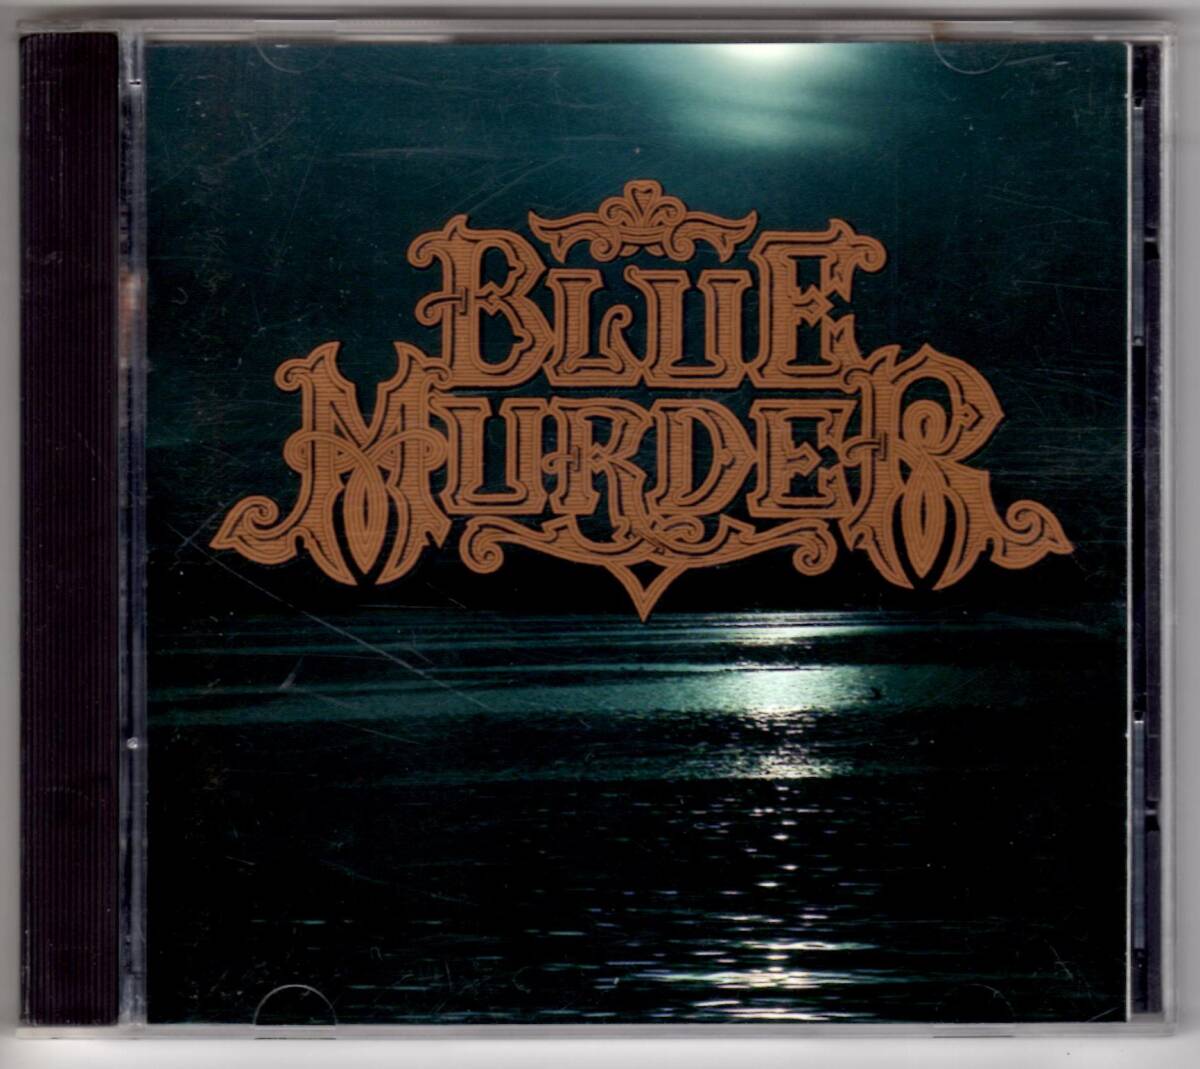 Used CD 輸入盤 ブルー・マーダー Blue Murder『ブルー・マーダー』- Blue Murder(1989年) 全9曲アメリカ盤